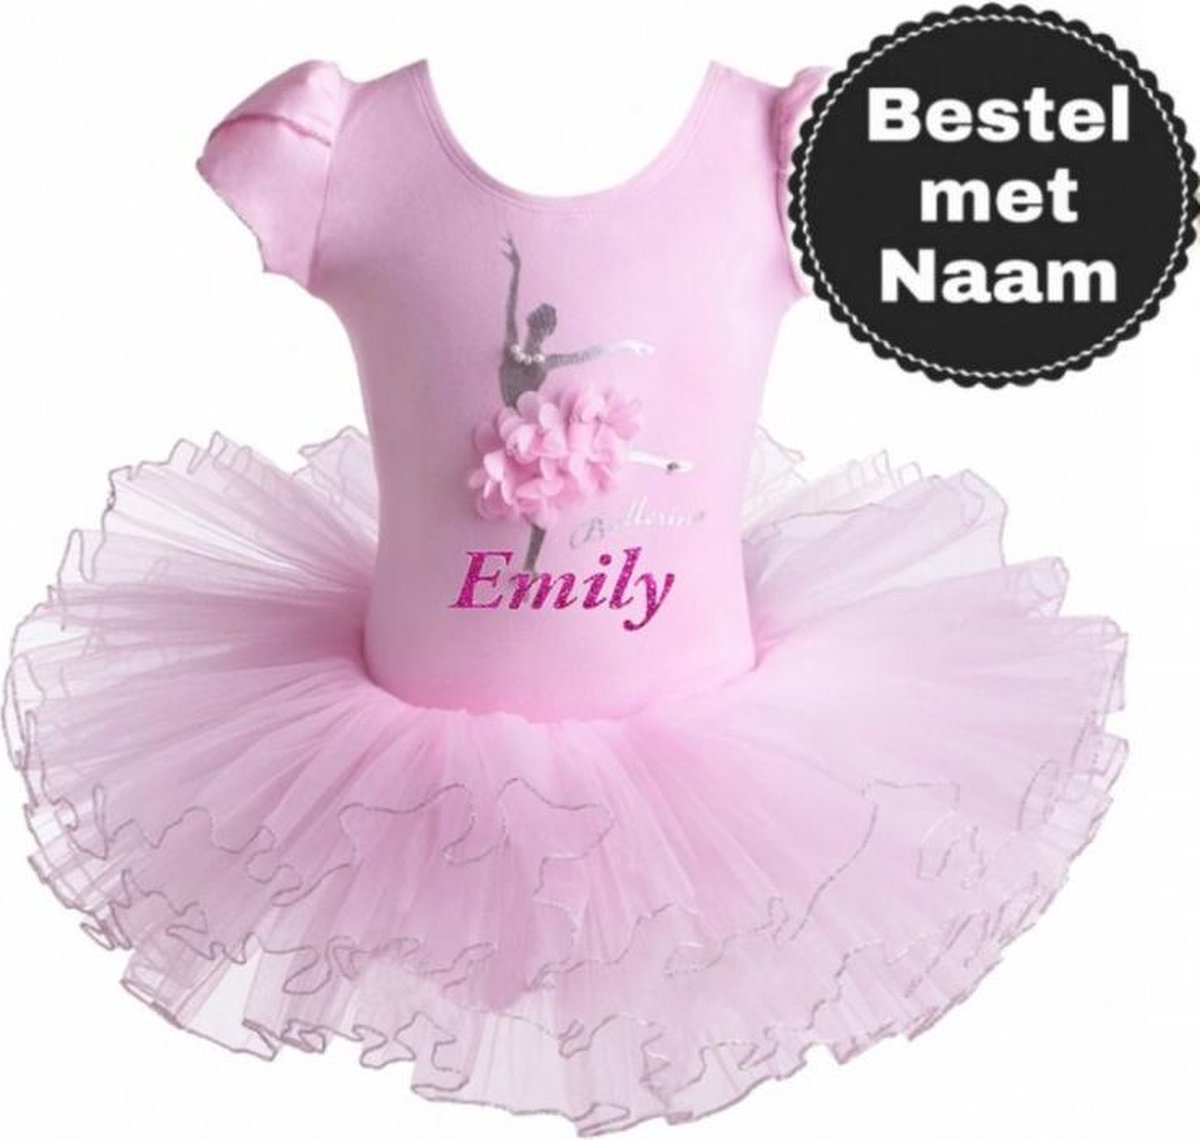 Balletpakje Ballerina + Eigen naam + Tutu - roze - Ballet - maat 110-116 prinsessen tutu verkleed jurk meisje